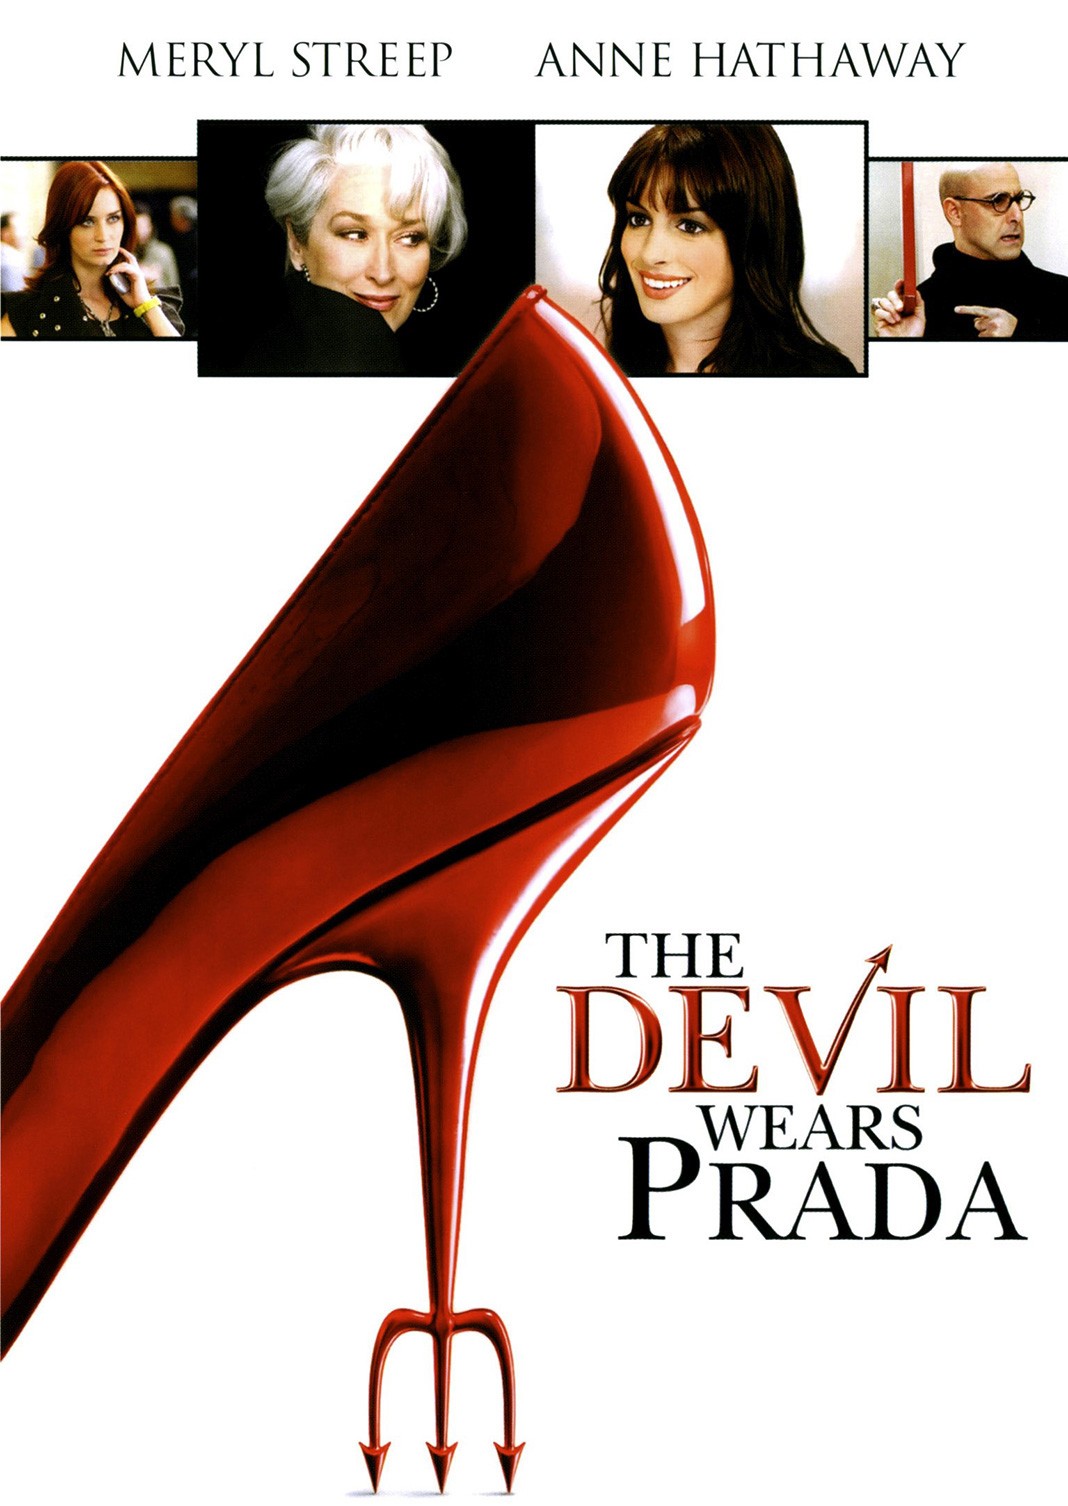 Афиша из фильма «Дьявол носит Prada» (The Devil Wears Prada), 2006 г.